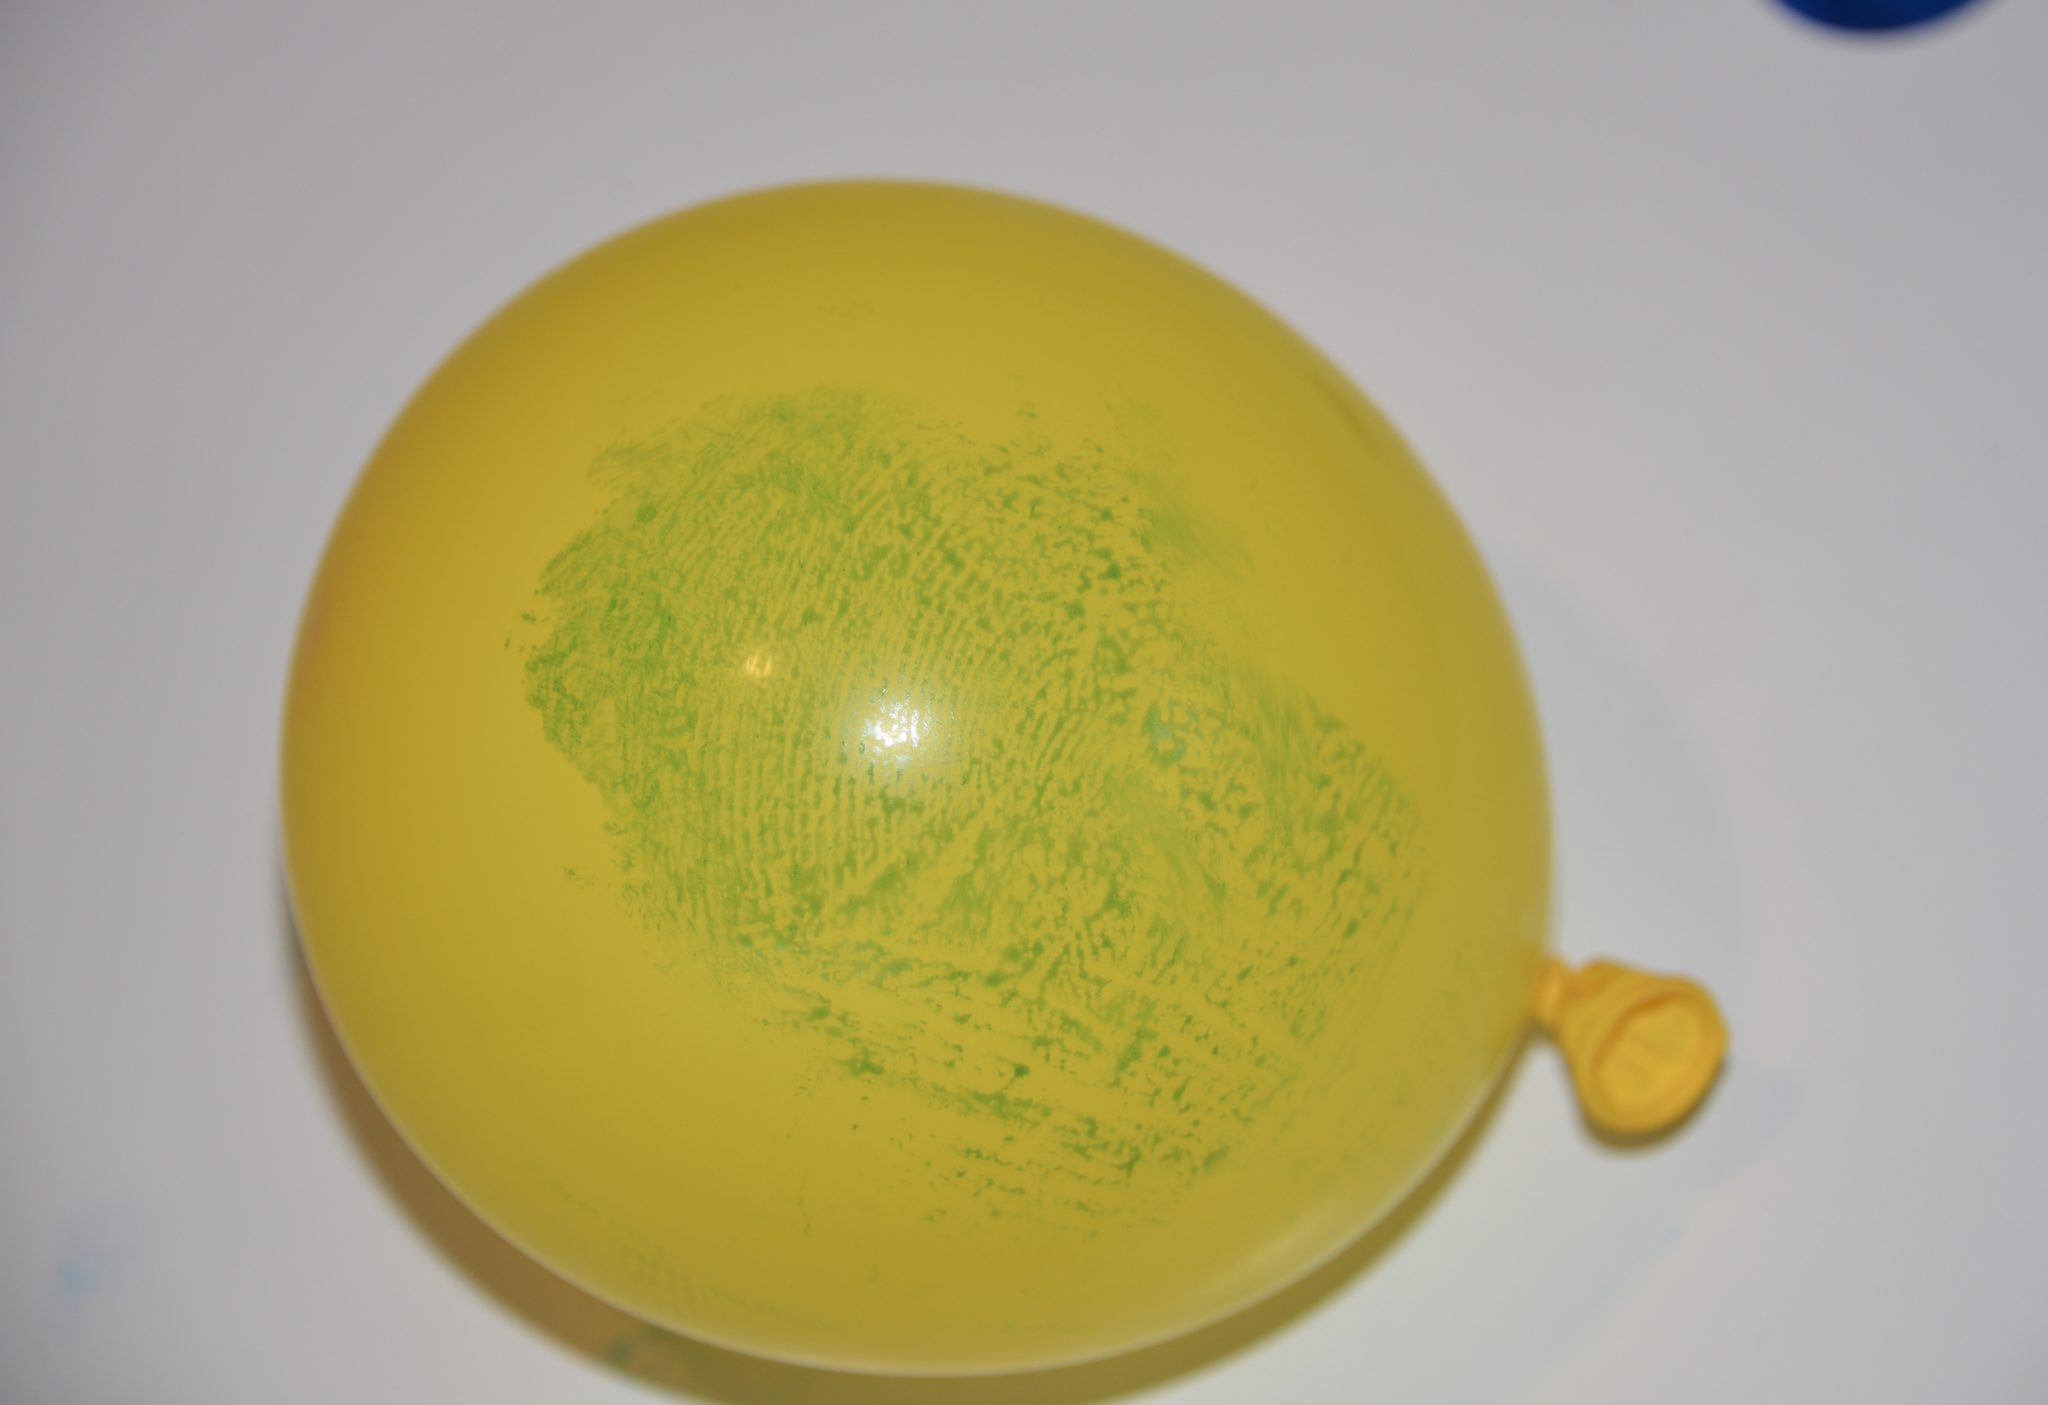 Balloon with a fingerprint for a fingerprint experiment for kids